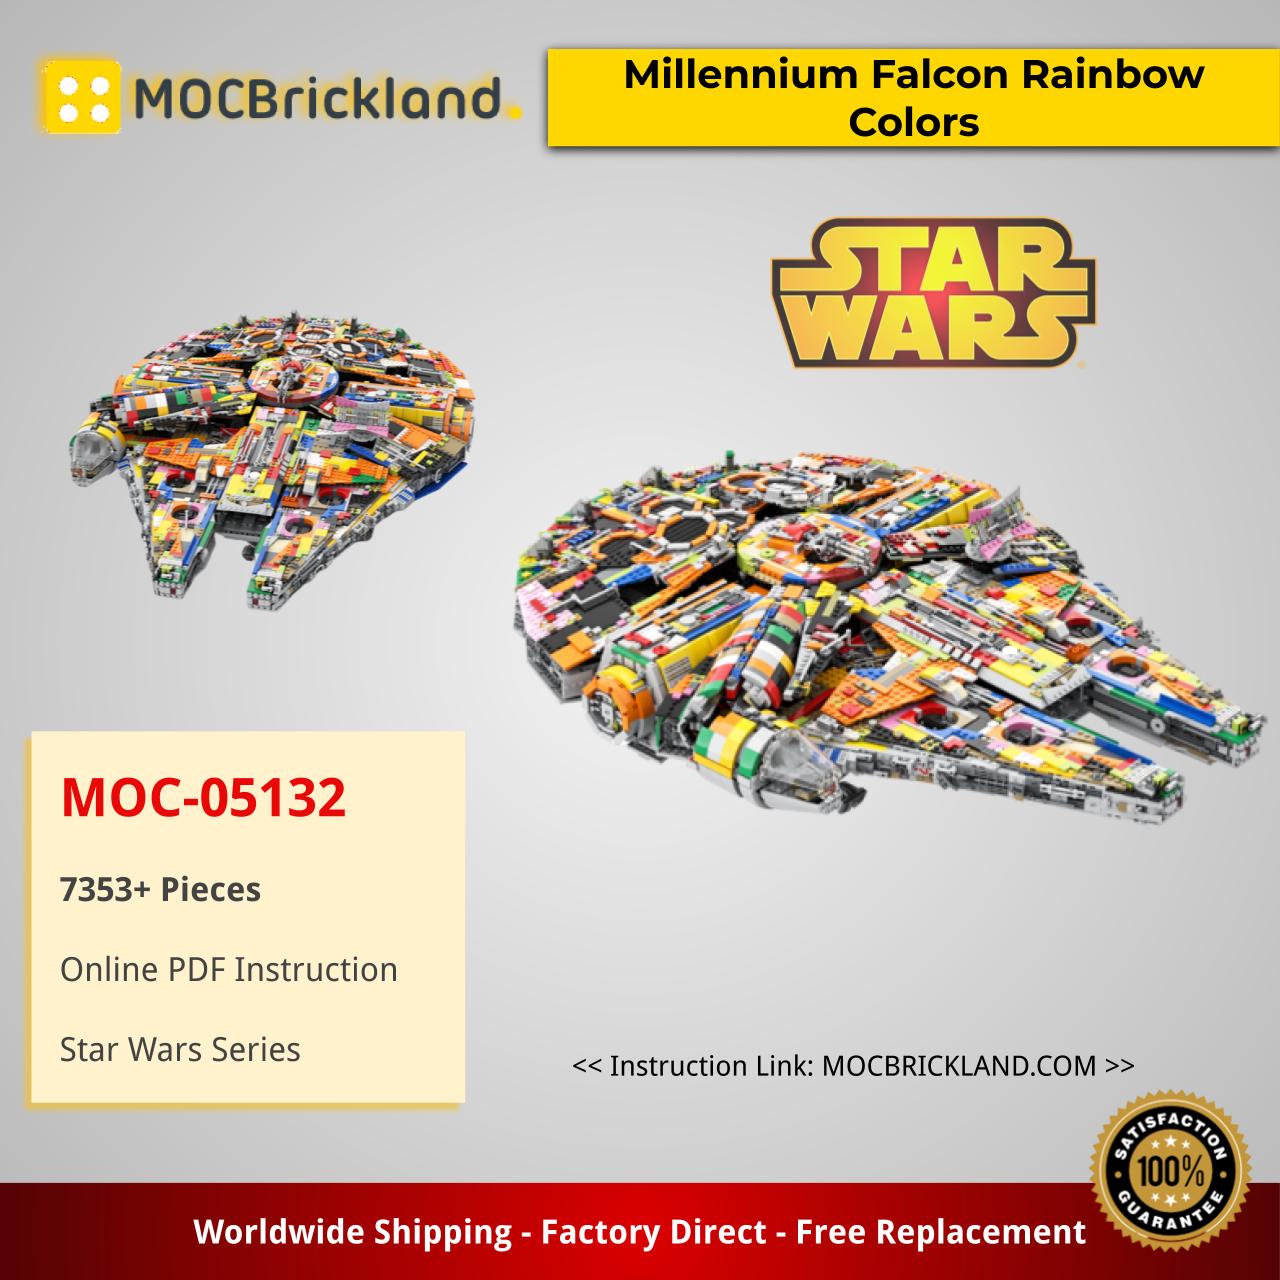 STAR WARS MOC-05132 Millennium Falcon Rainbow Colors MOCBRICKLAND 